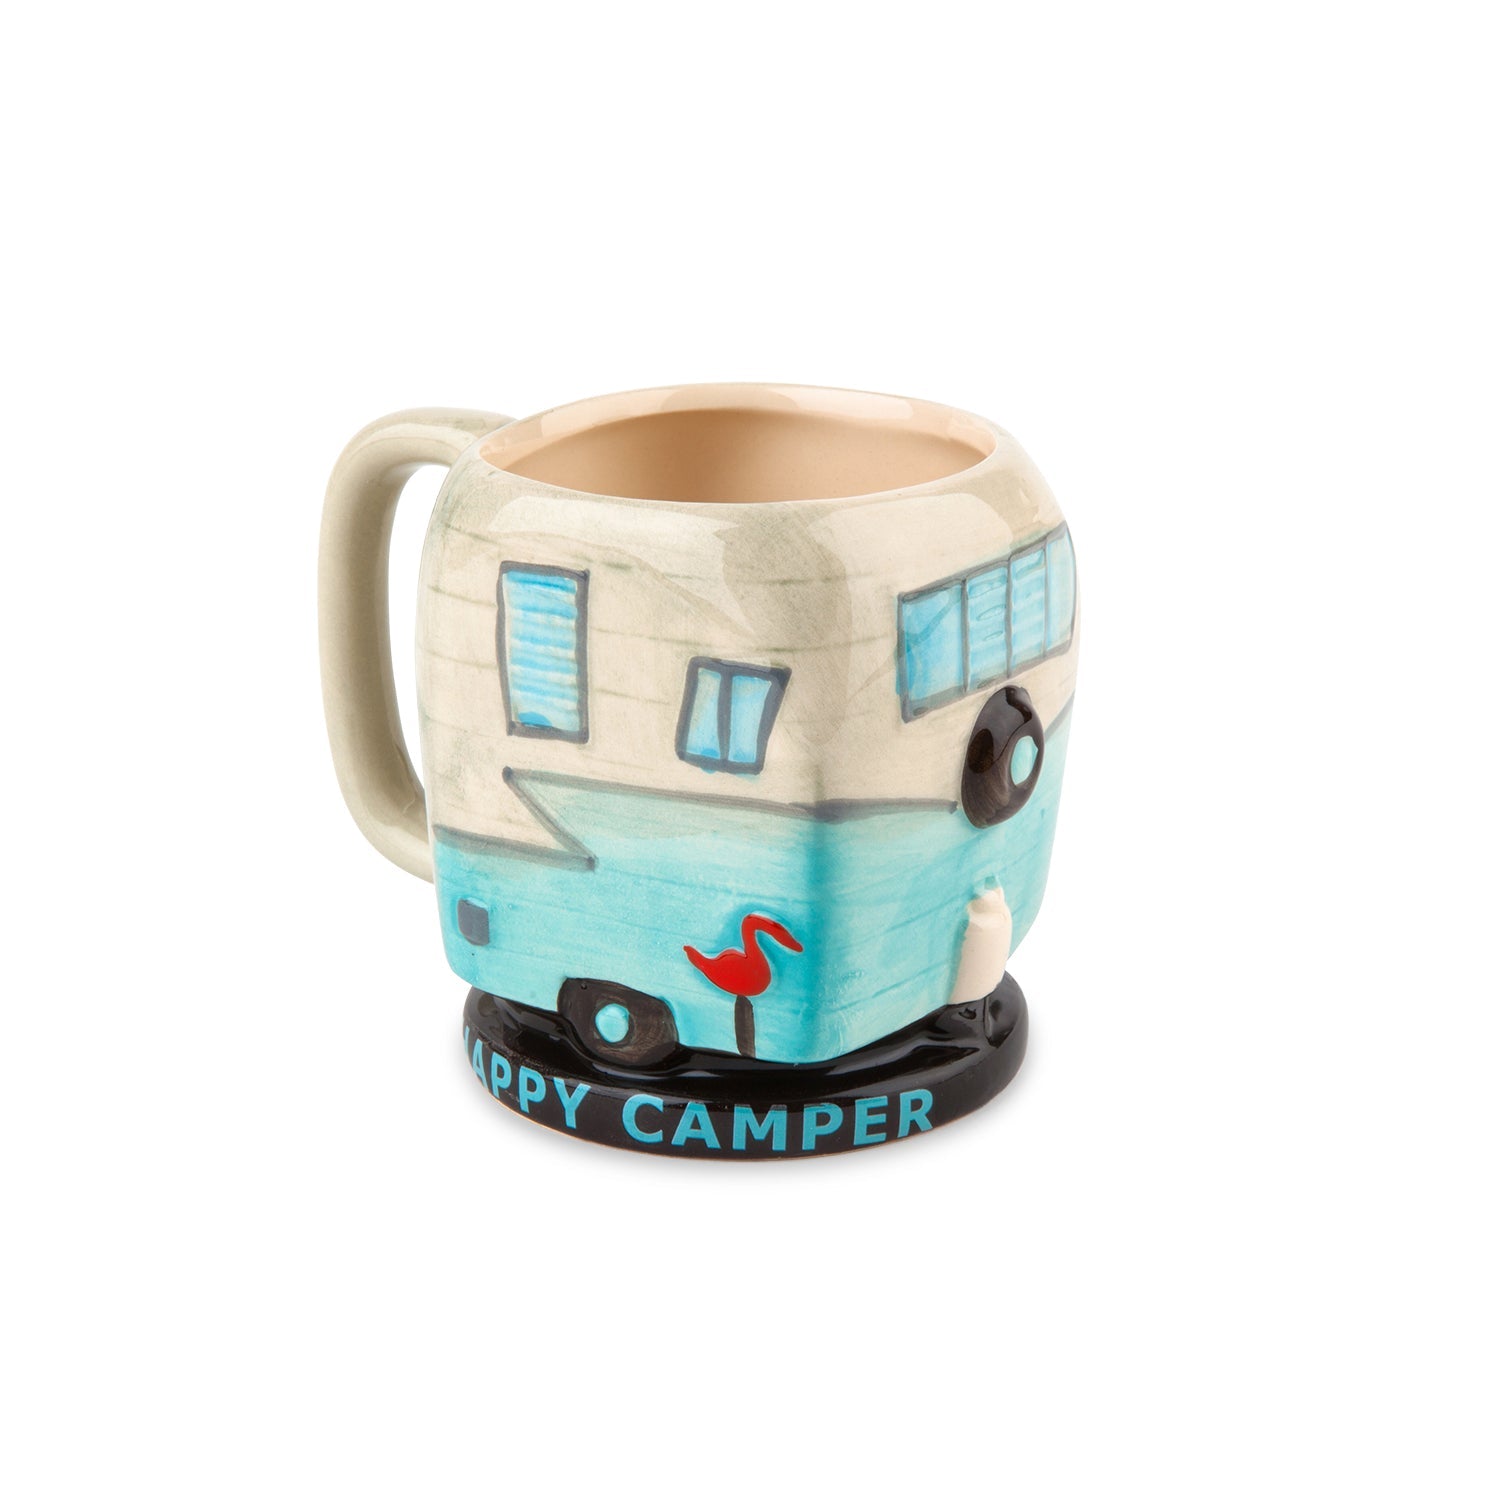 The Happy Camper Coffee Mug